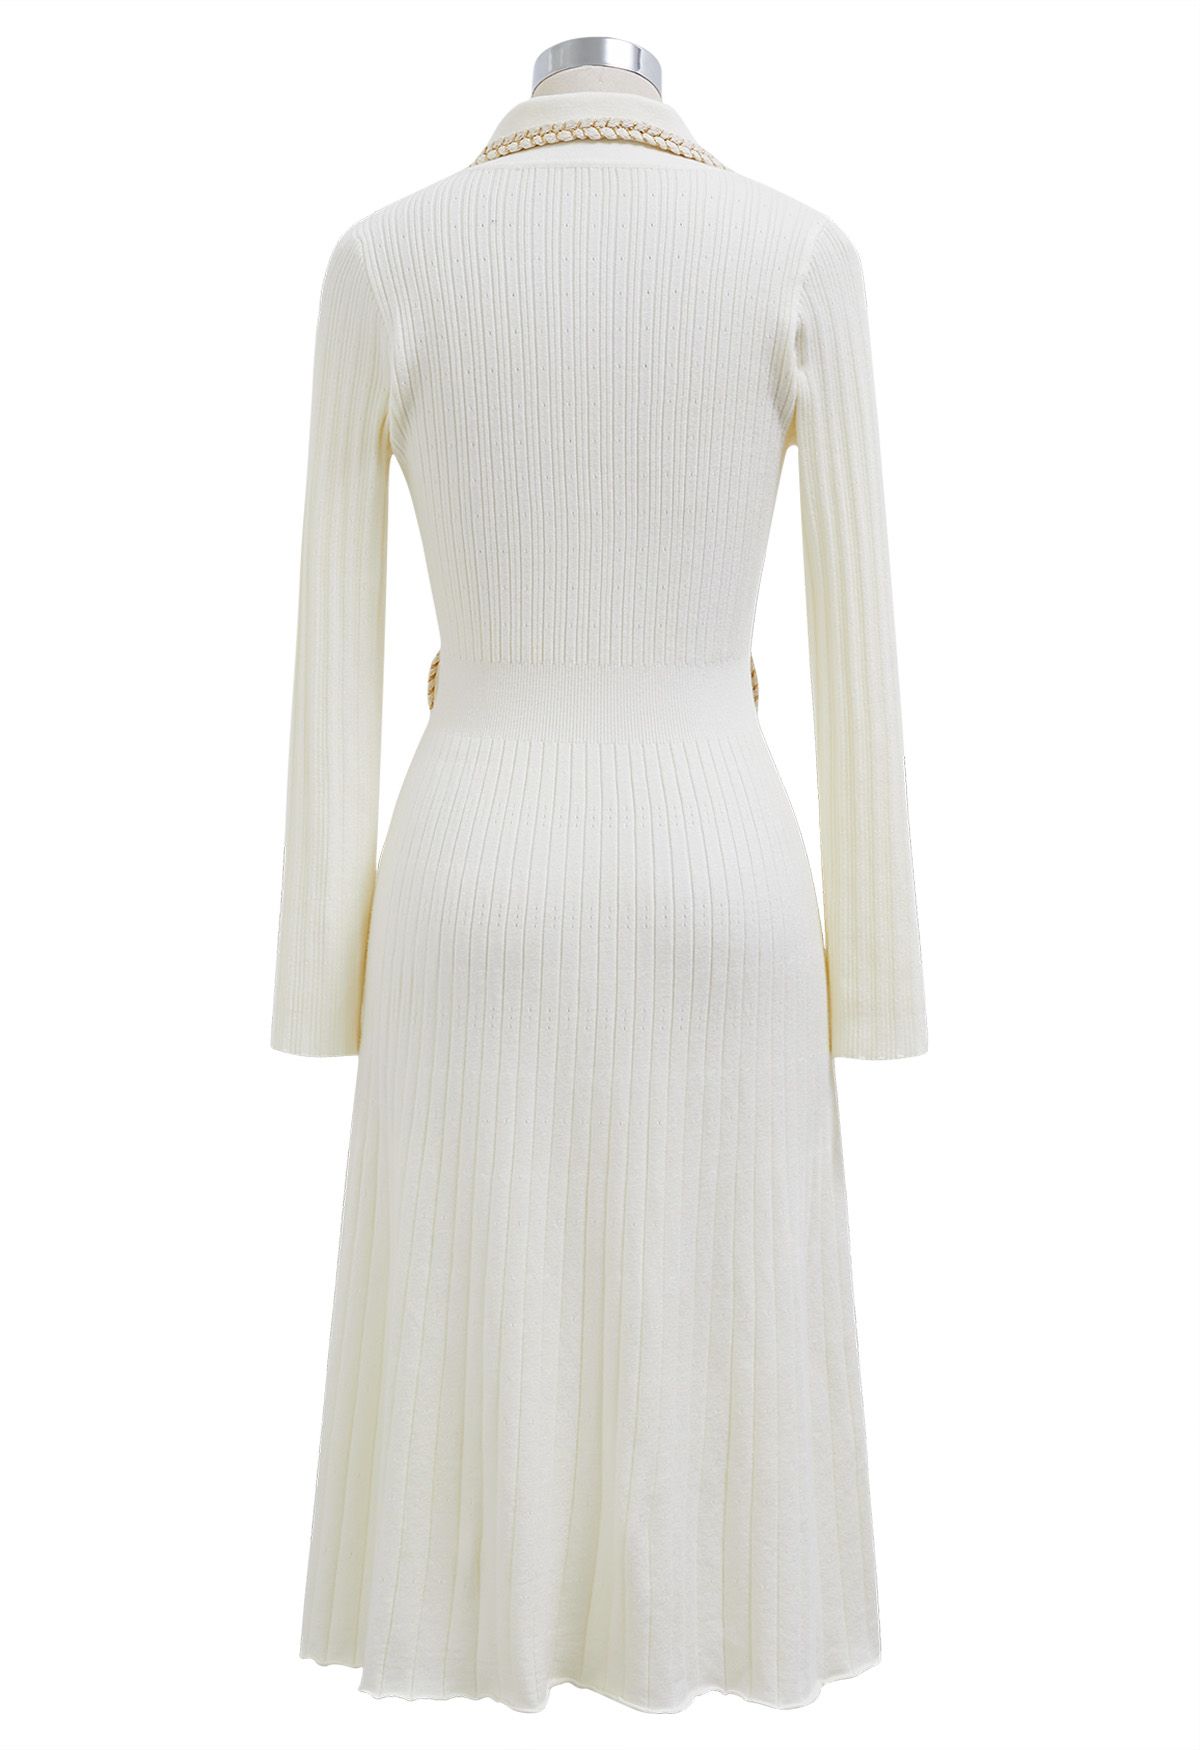 Collared Braided Edge Knit Midi Dress in White